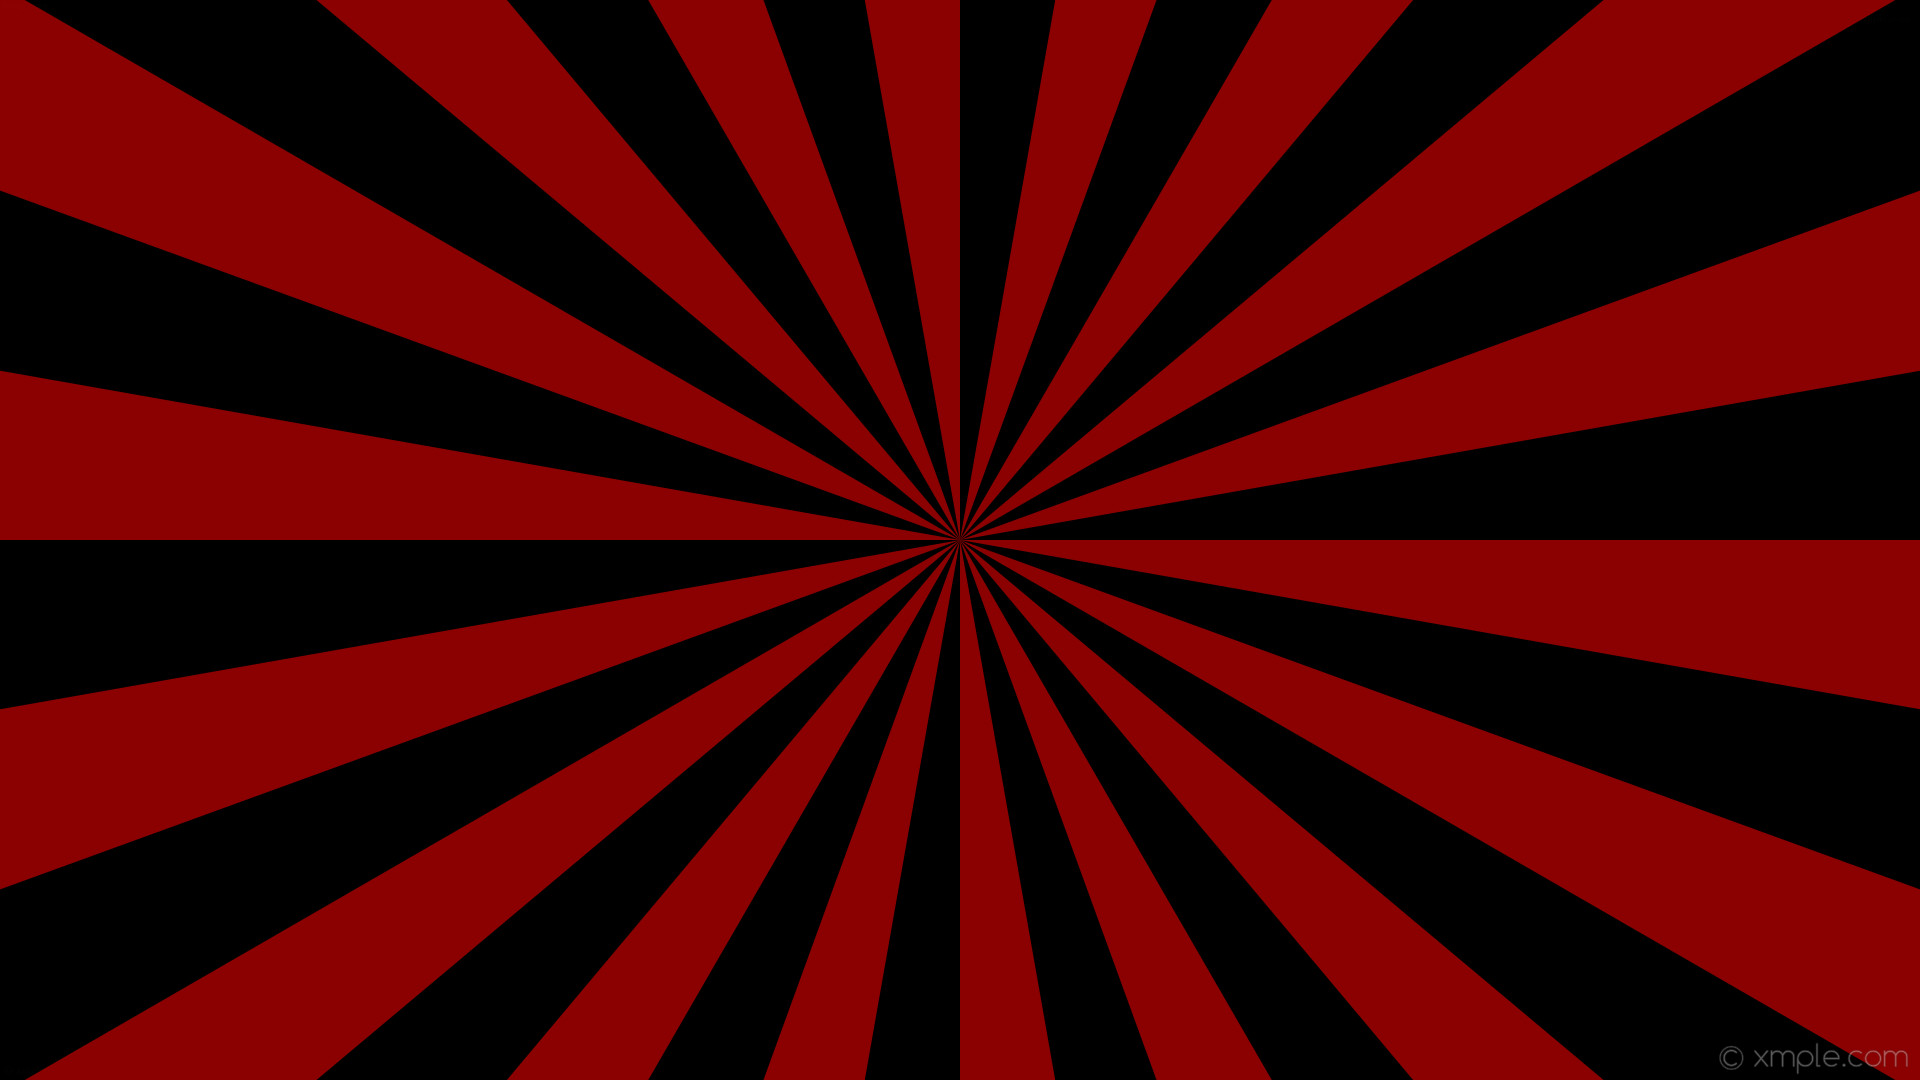 1920x1080 wallpaper rays black red burst sunburst dark red #8b0000 #000000 10Â° 18 0